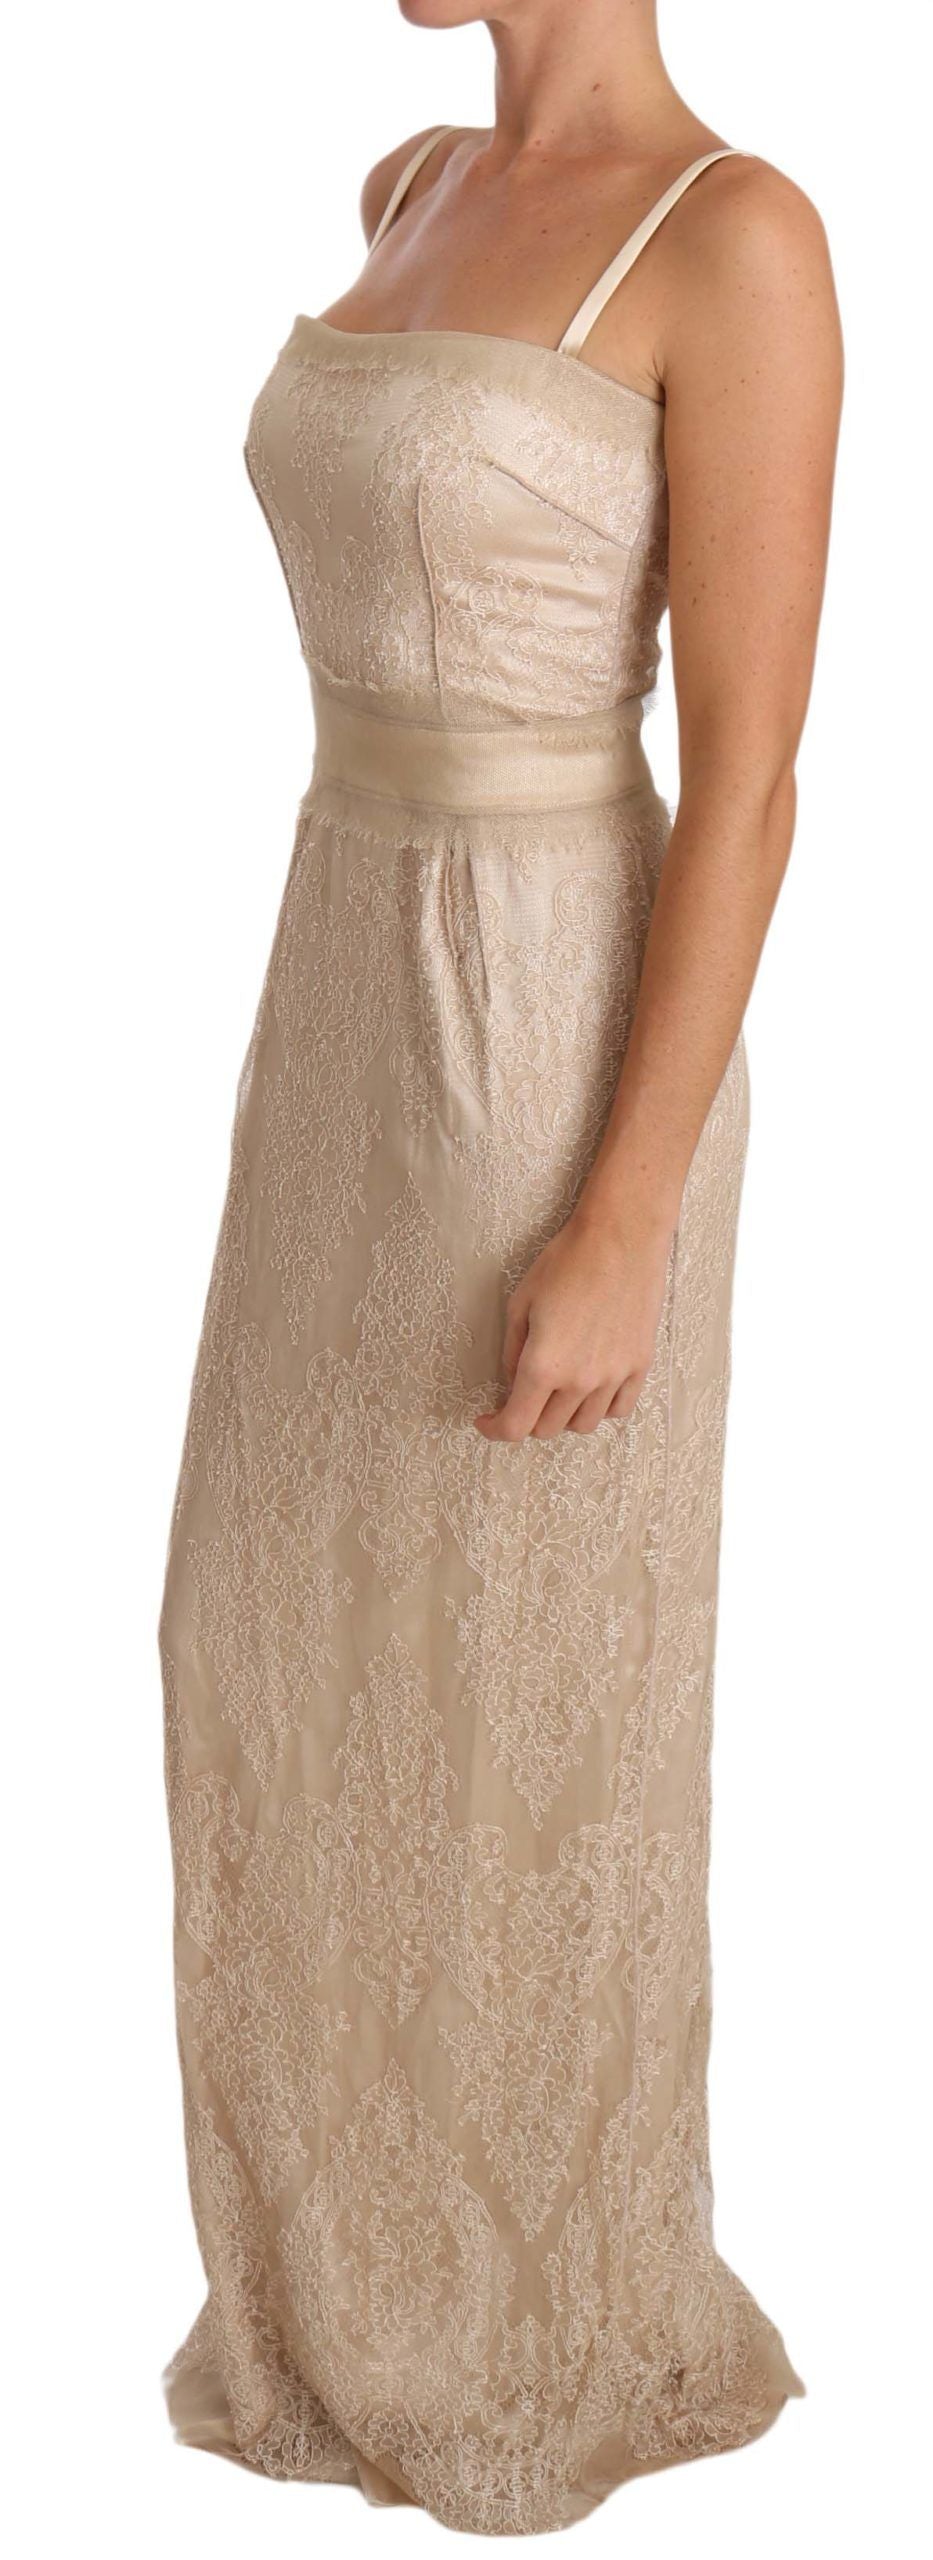 Elegant Beige Sheath Floor-Length Dress